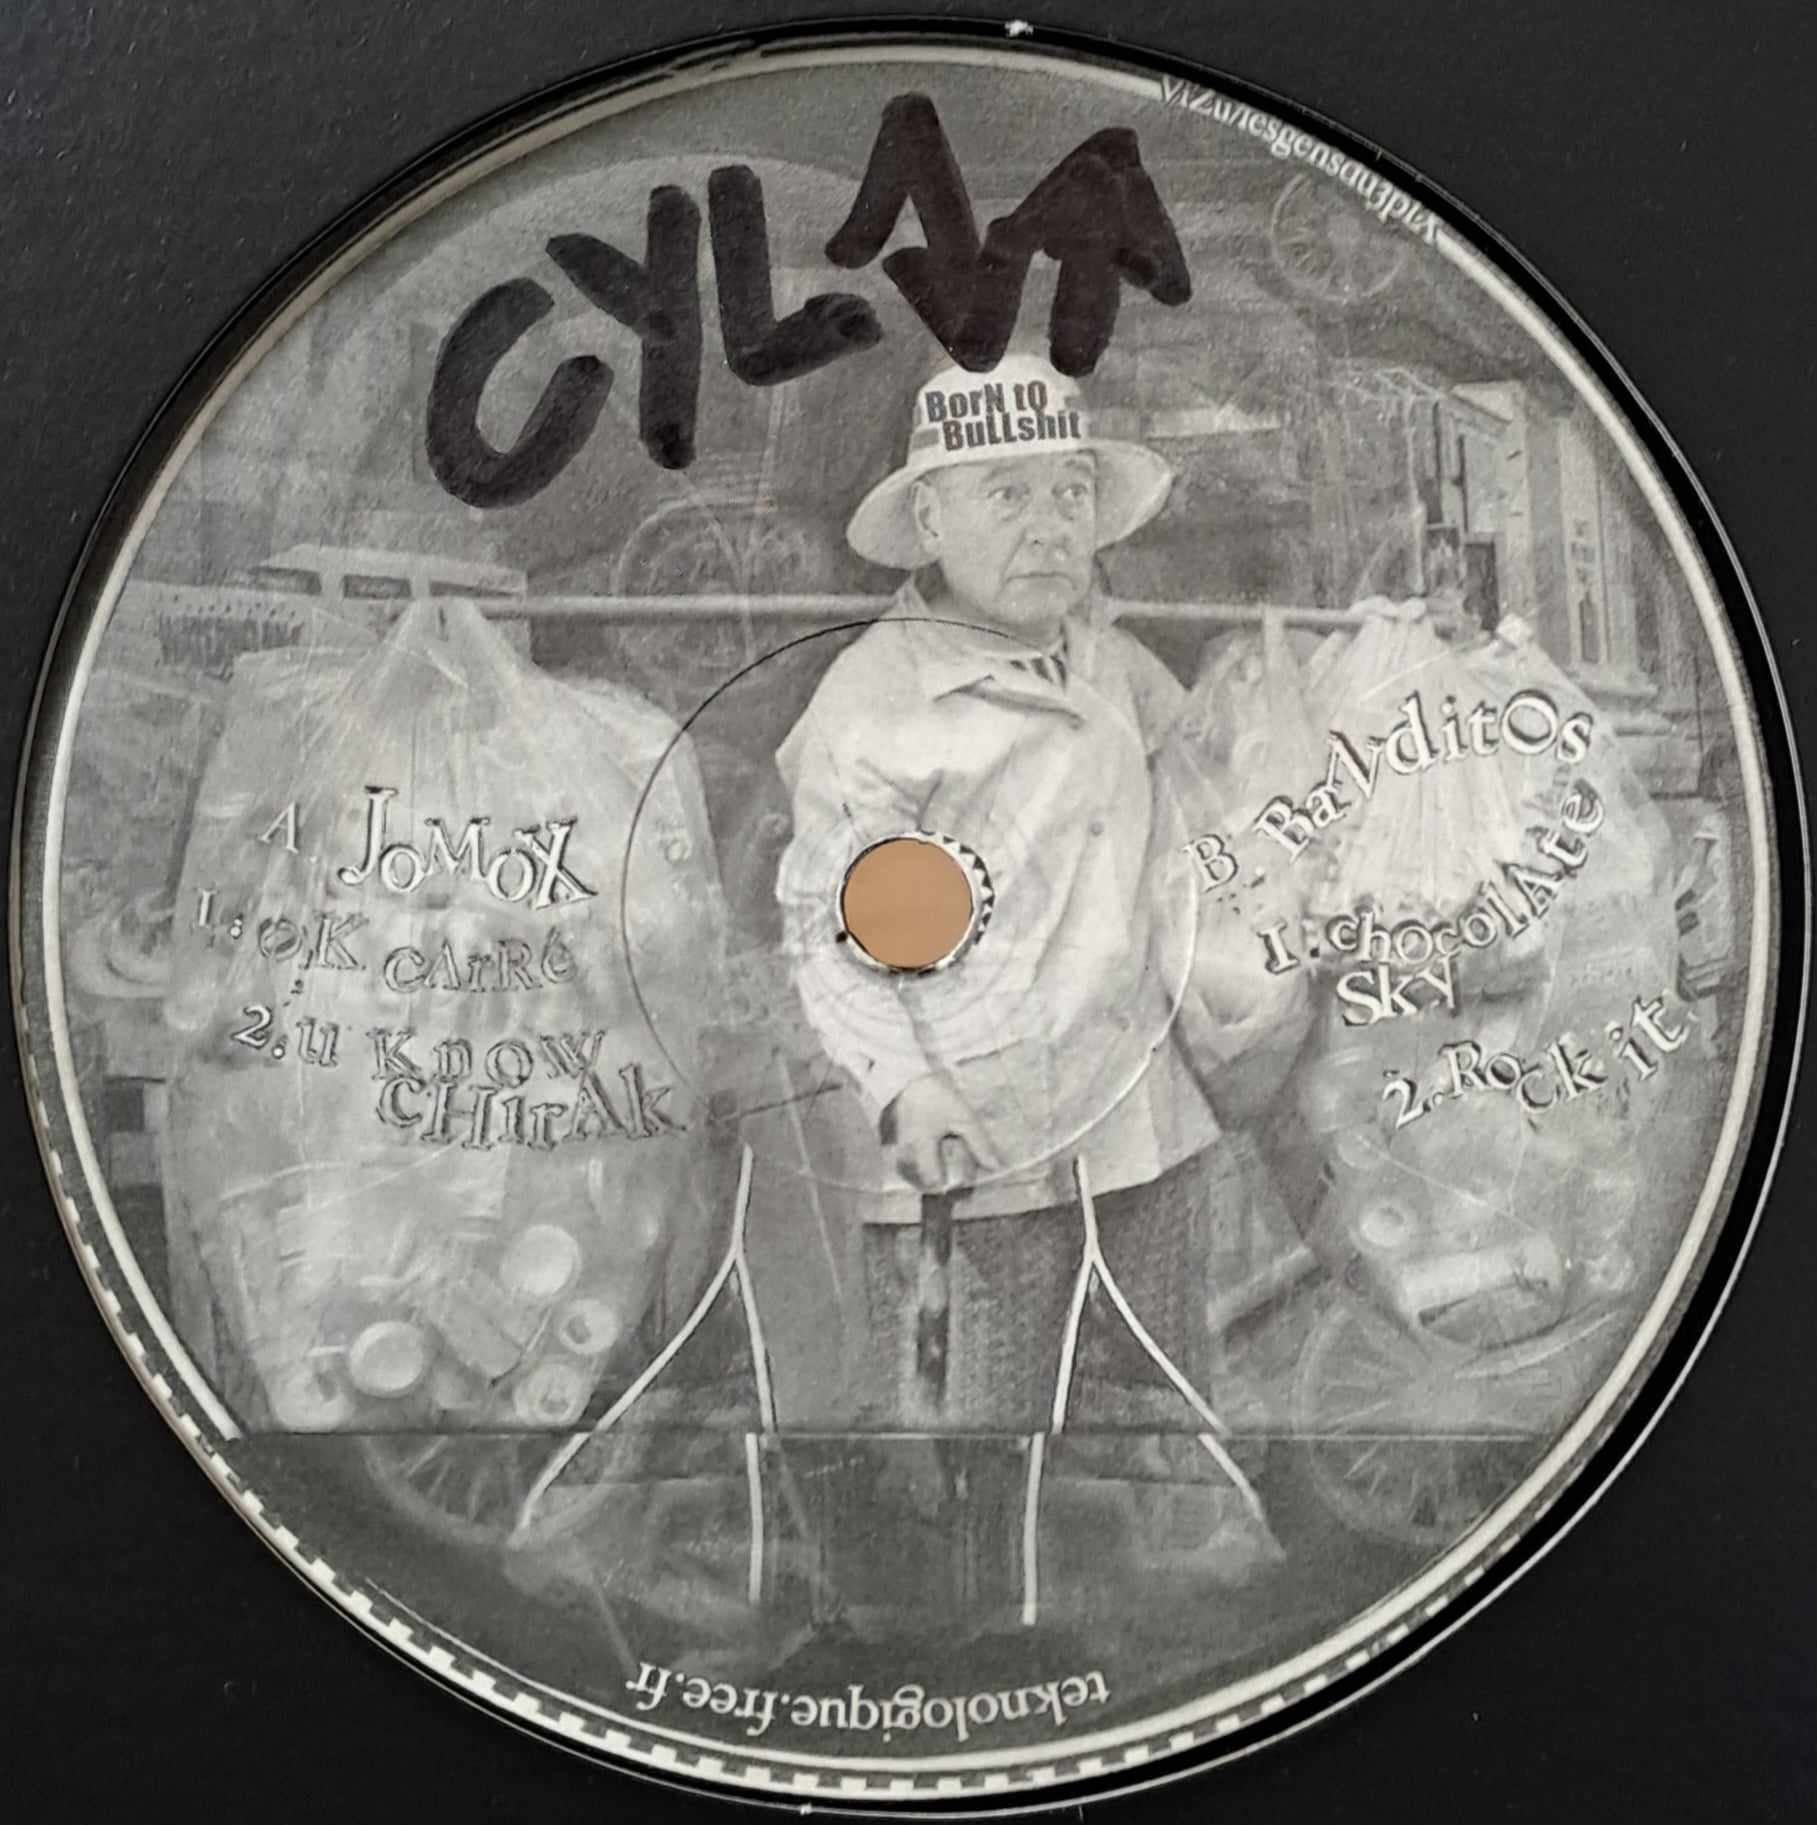 Da Putas Clan 04 - vinyle freetekno